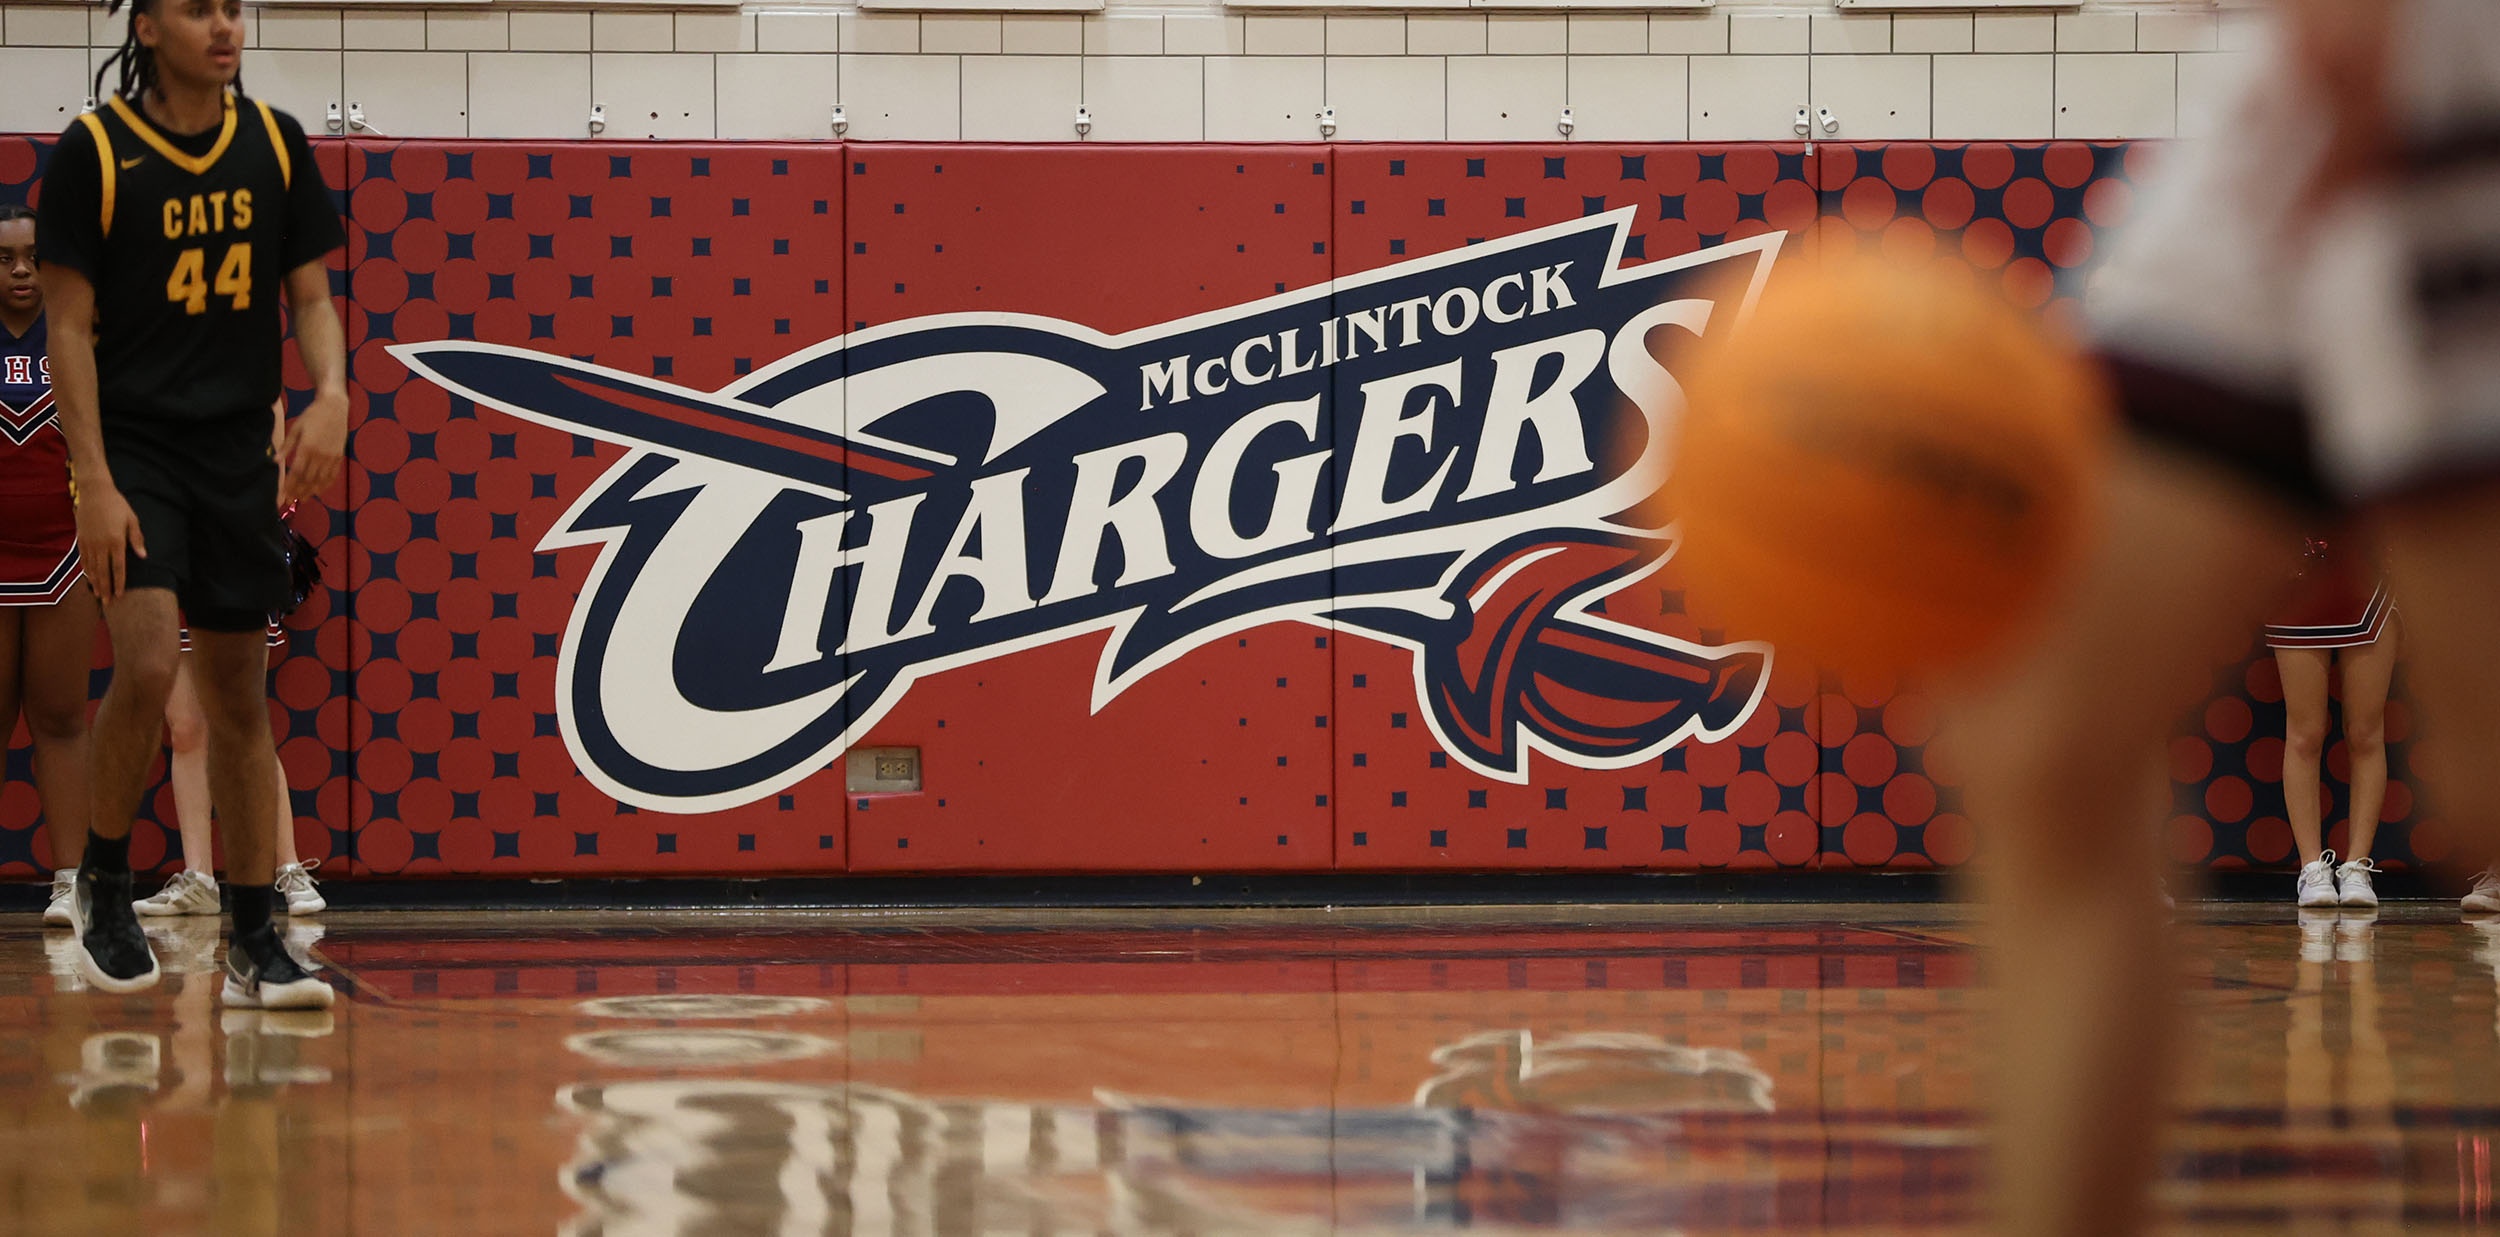 McClintock Chargers Basketball